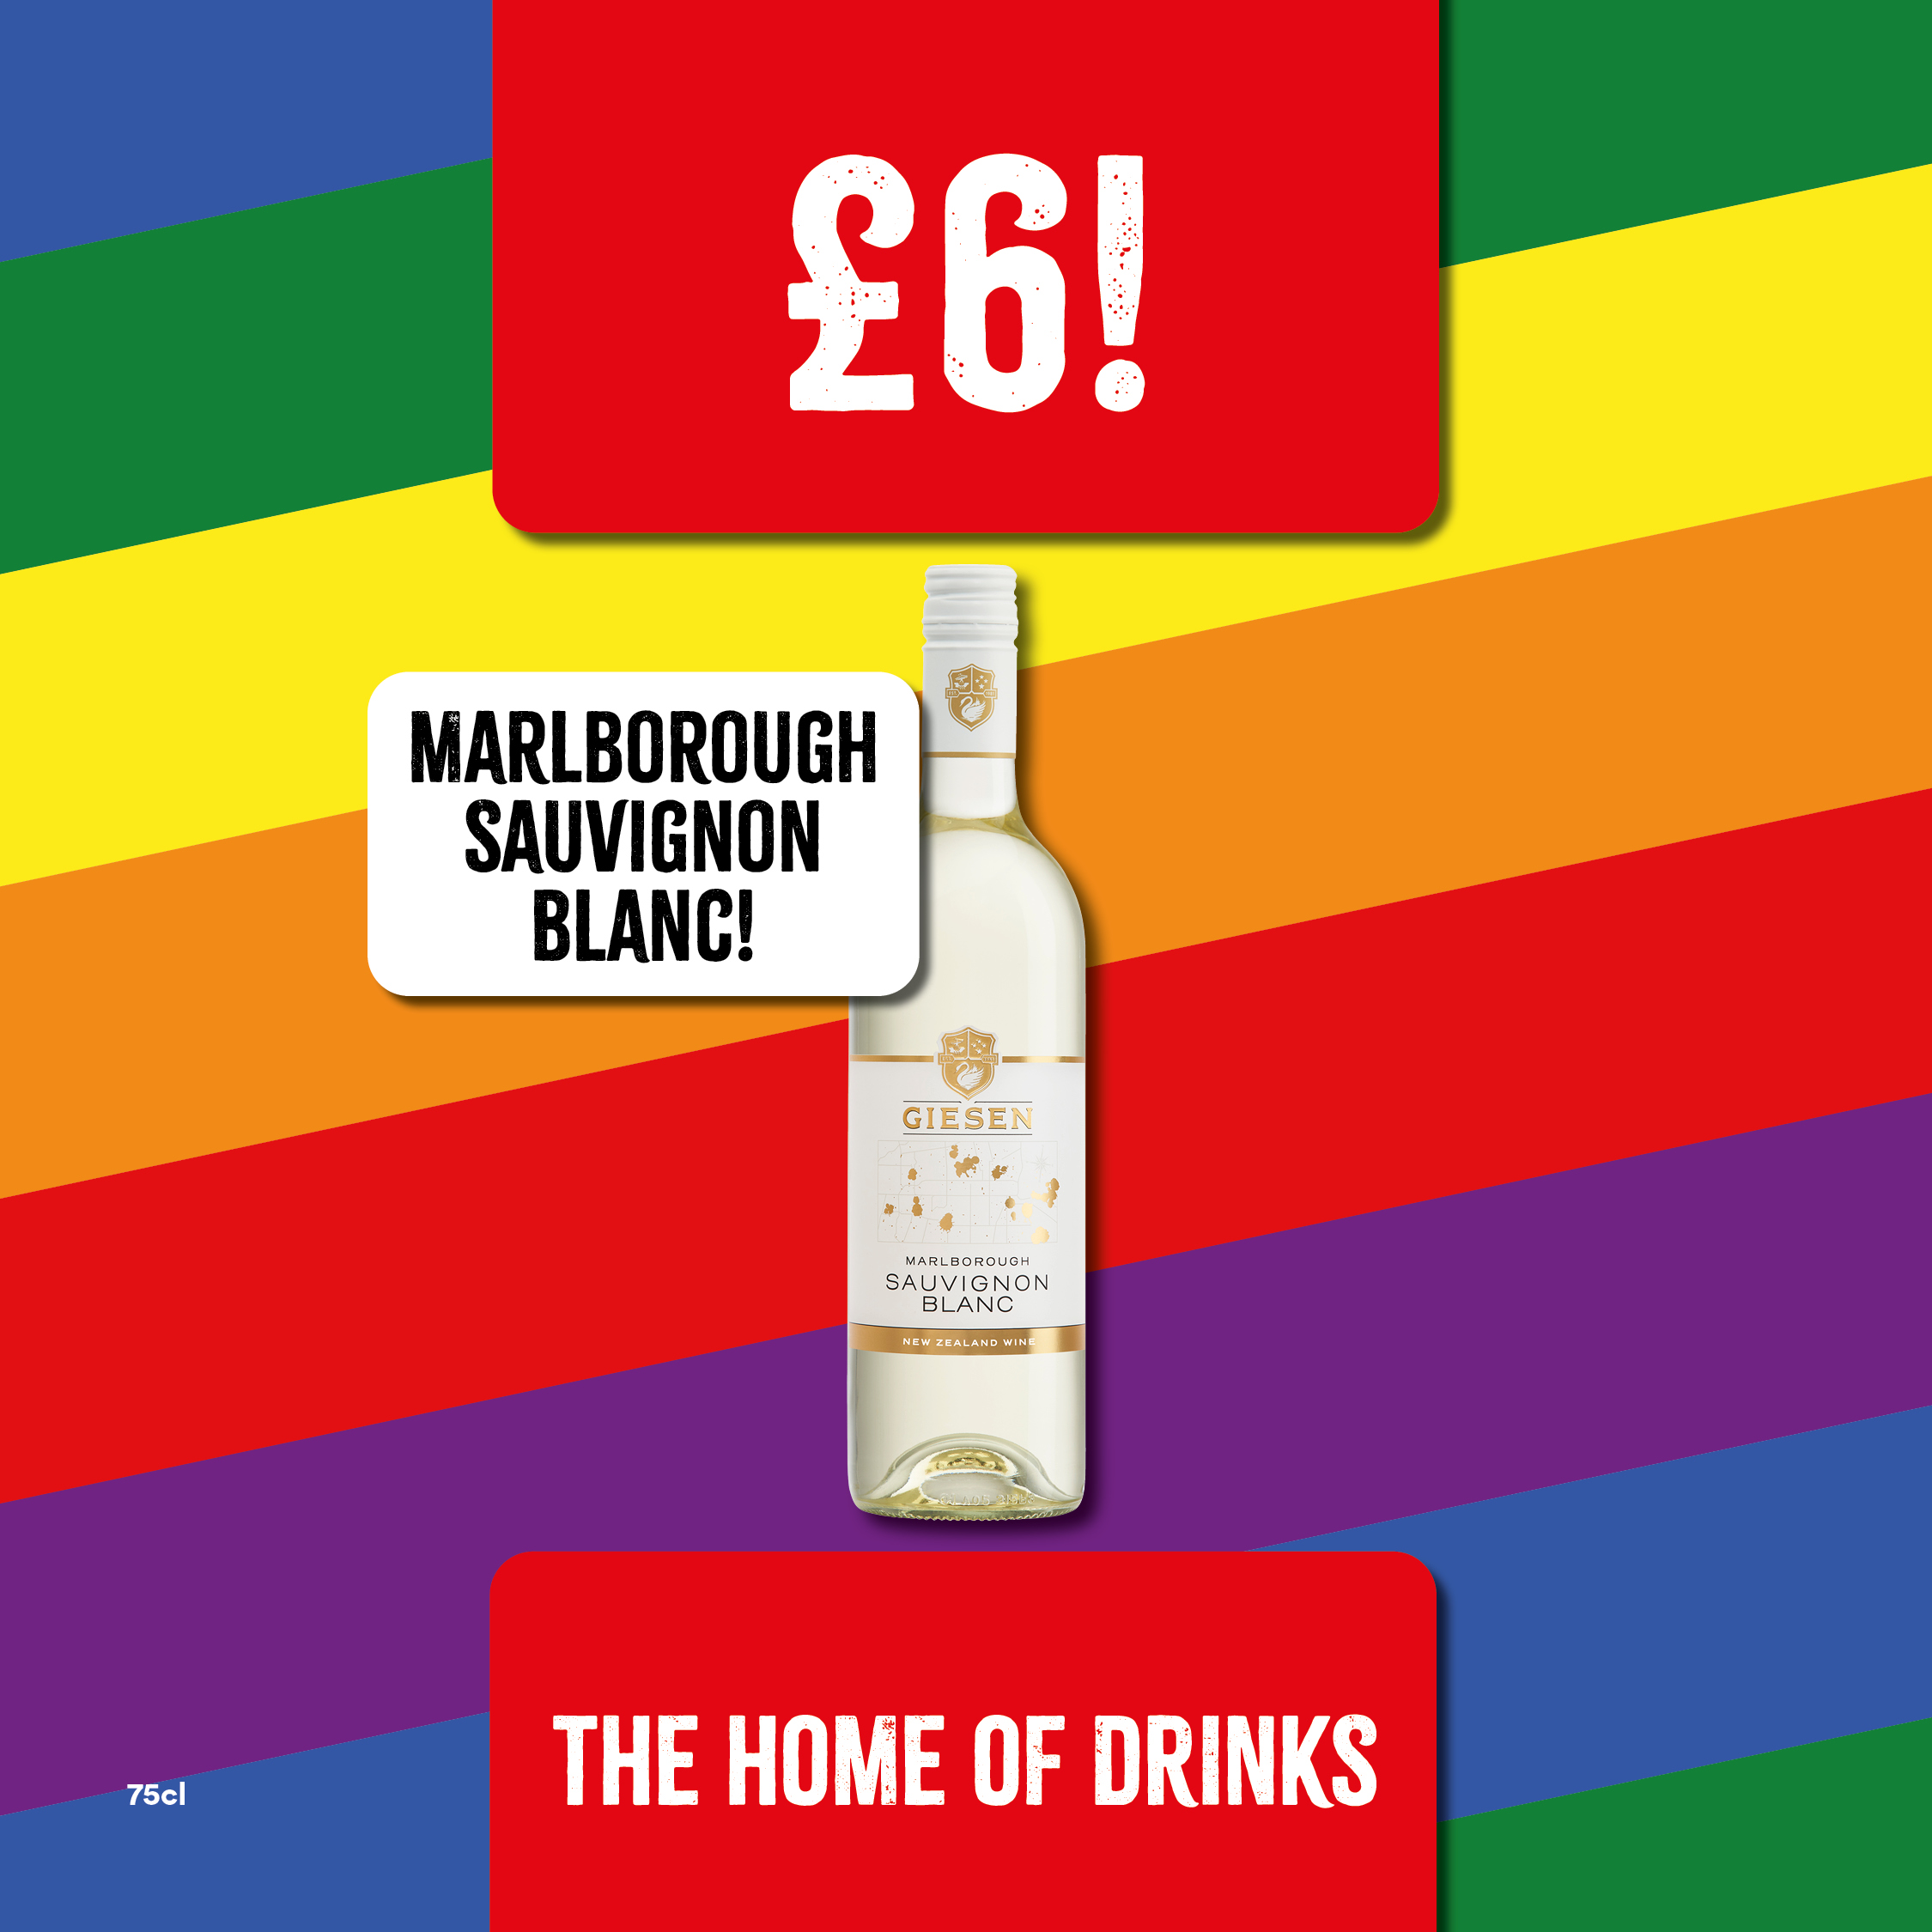 Only £6 Marlborough Sauvignon Blanc Bargain Booze Select Convenience Sheffield 01142 855559